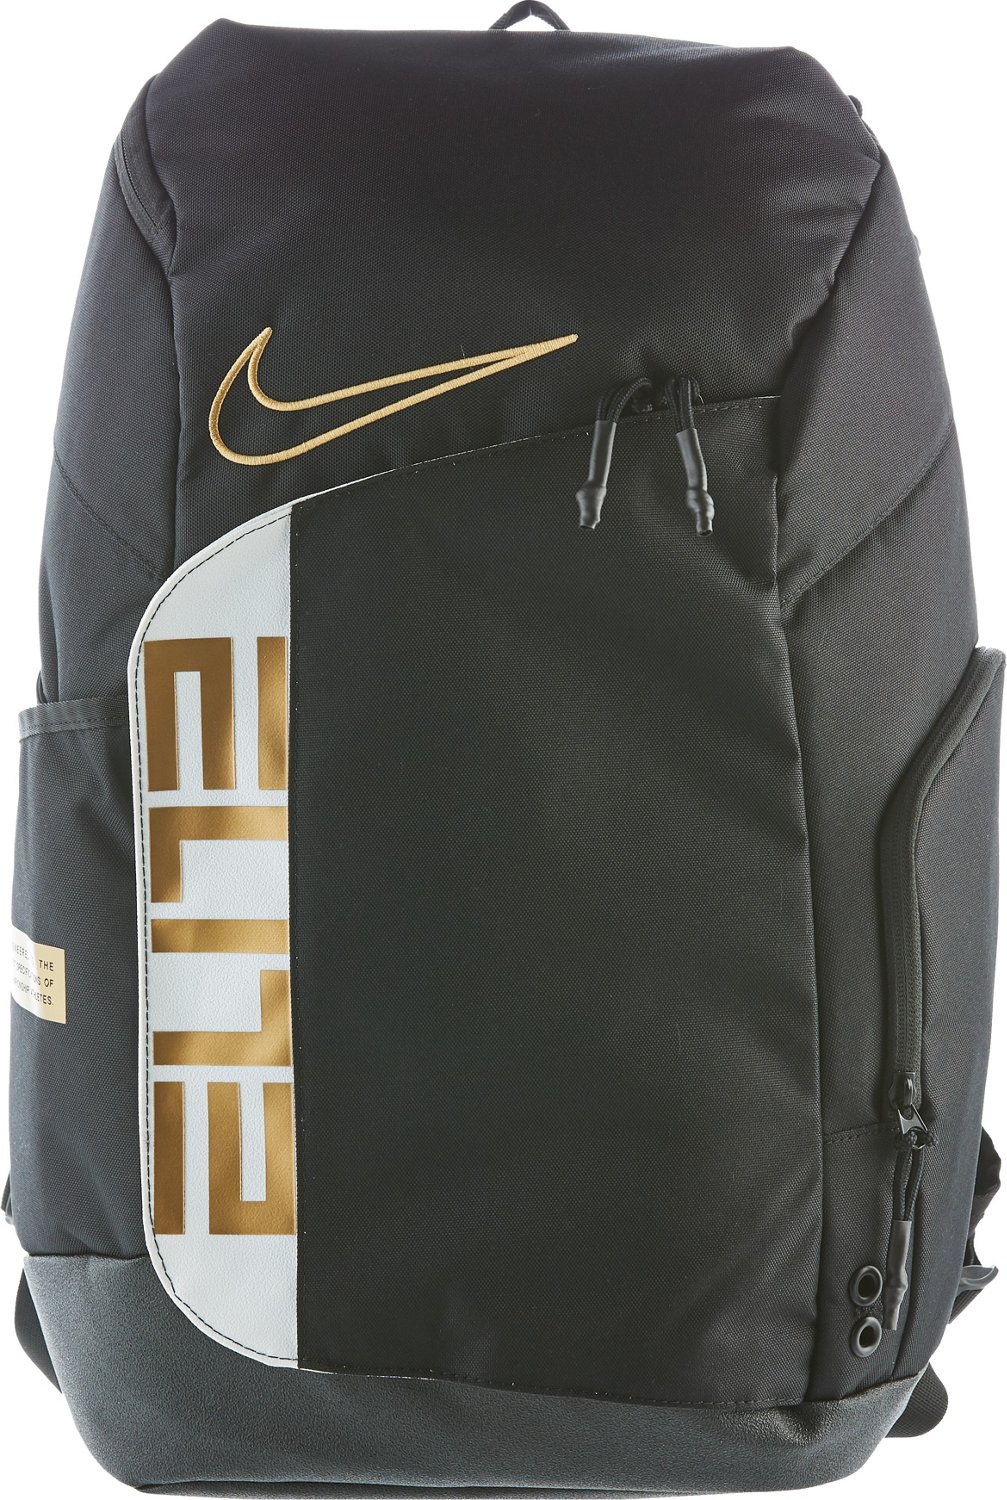 Nike Elite Pro Basketball Backpack | lupon.gov.ph